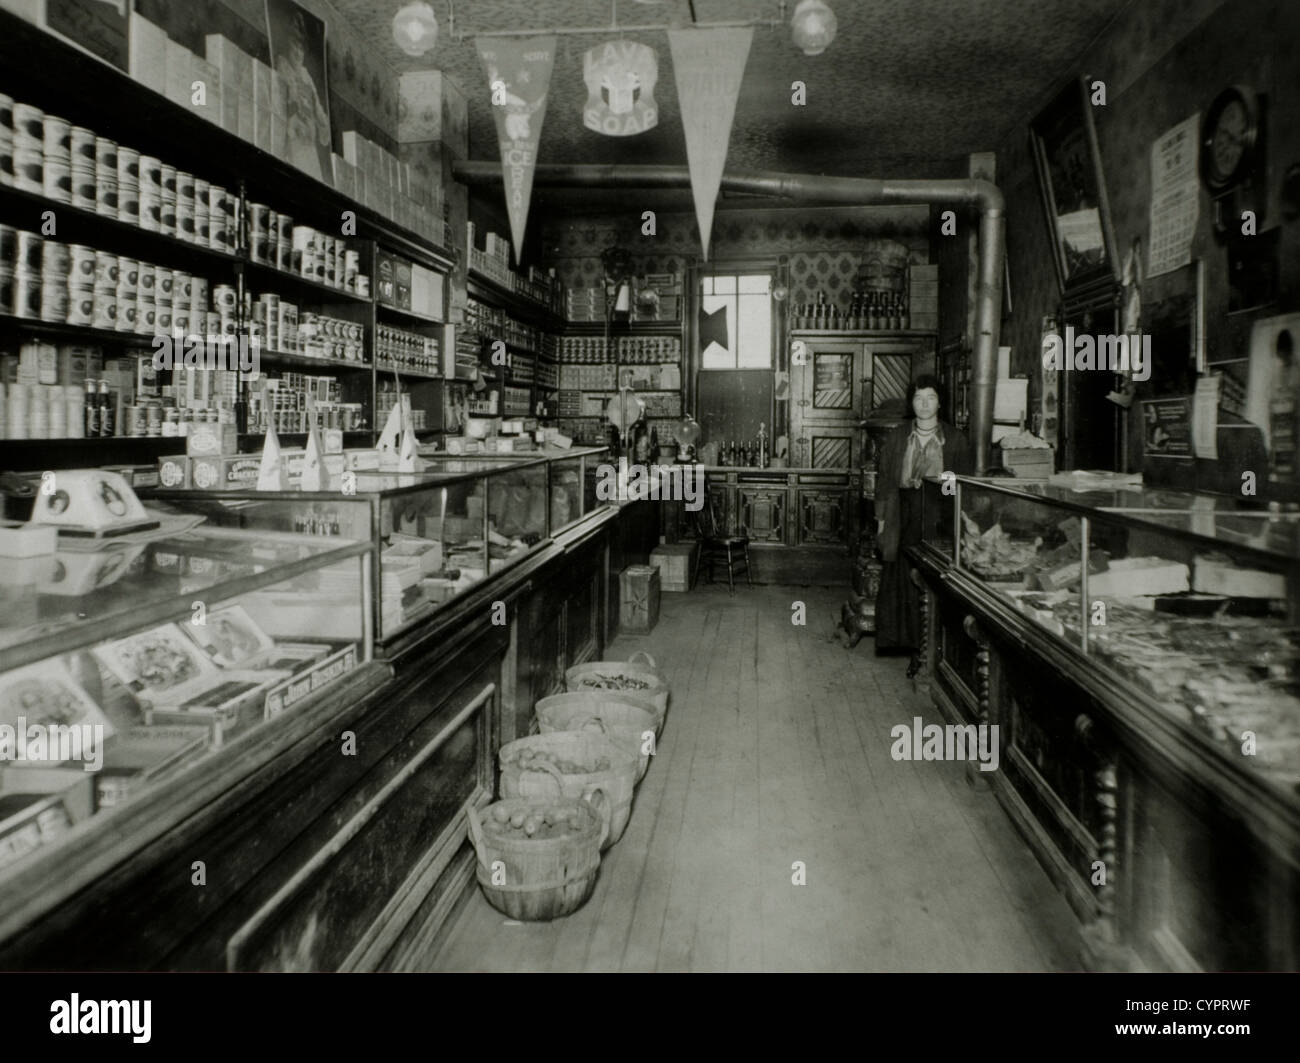 Lebensmittelhändler und Lebensmittelgeschäft, USA, um 1910 Stockfoto